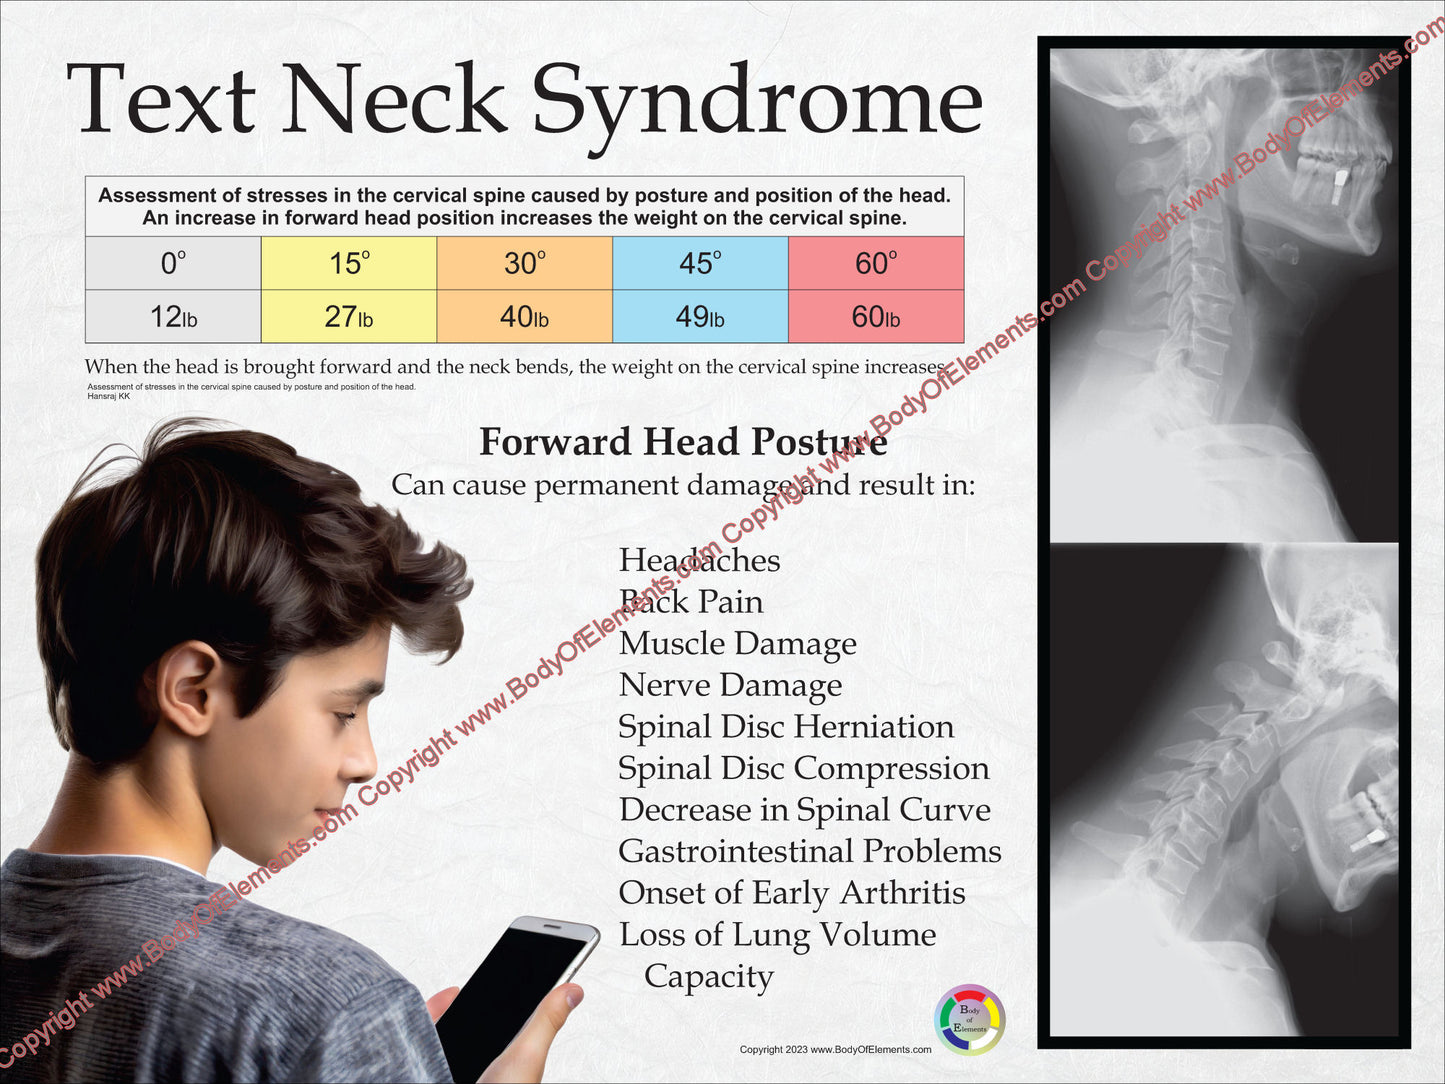 Child headache neck pain texting poster.